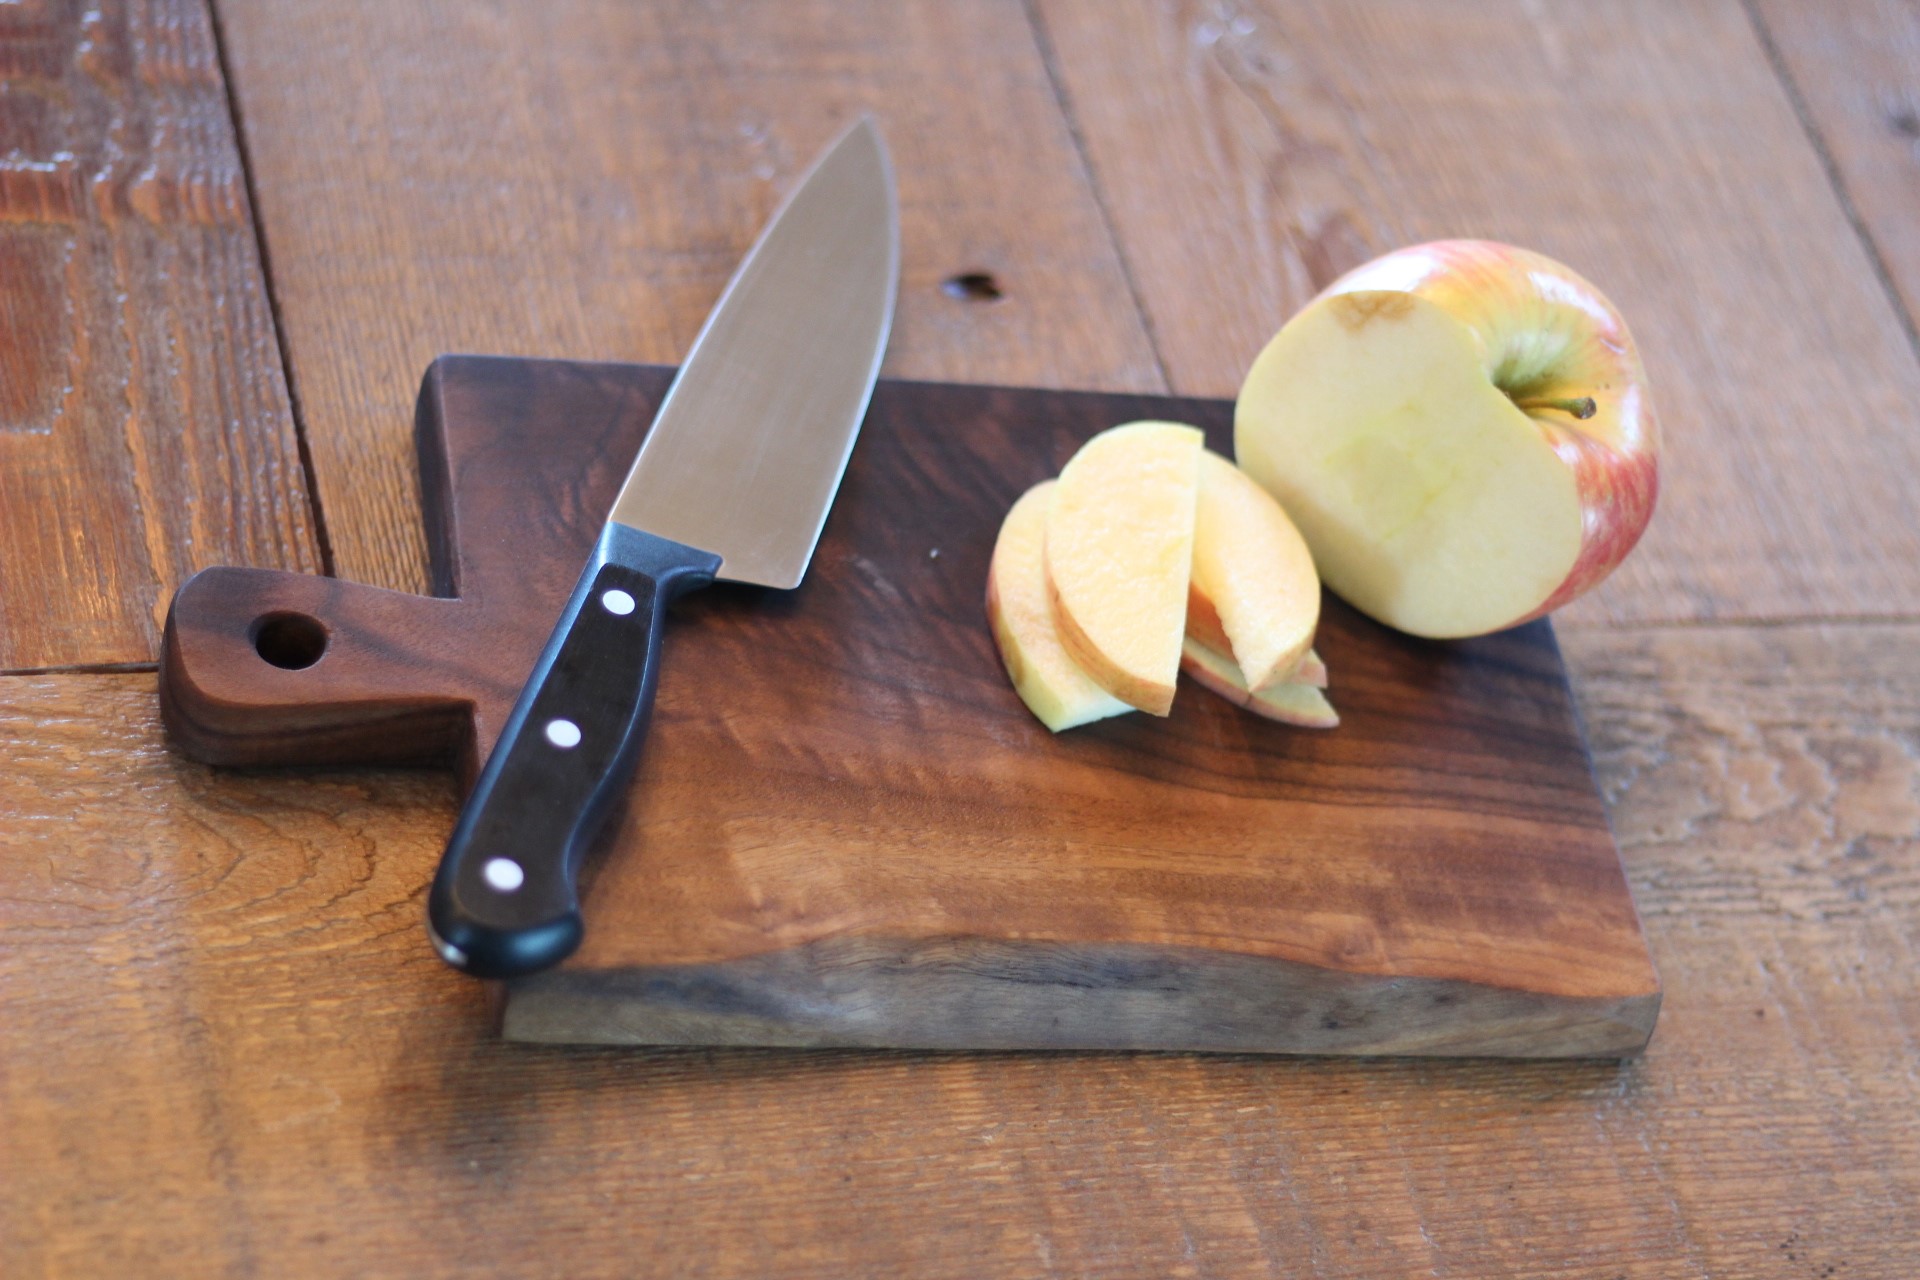 How to: Make a One-Hour Walnut Cutting Board